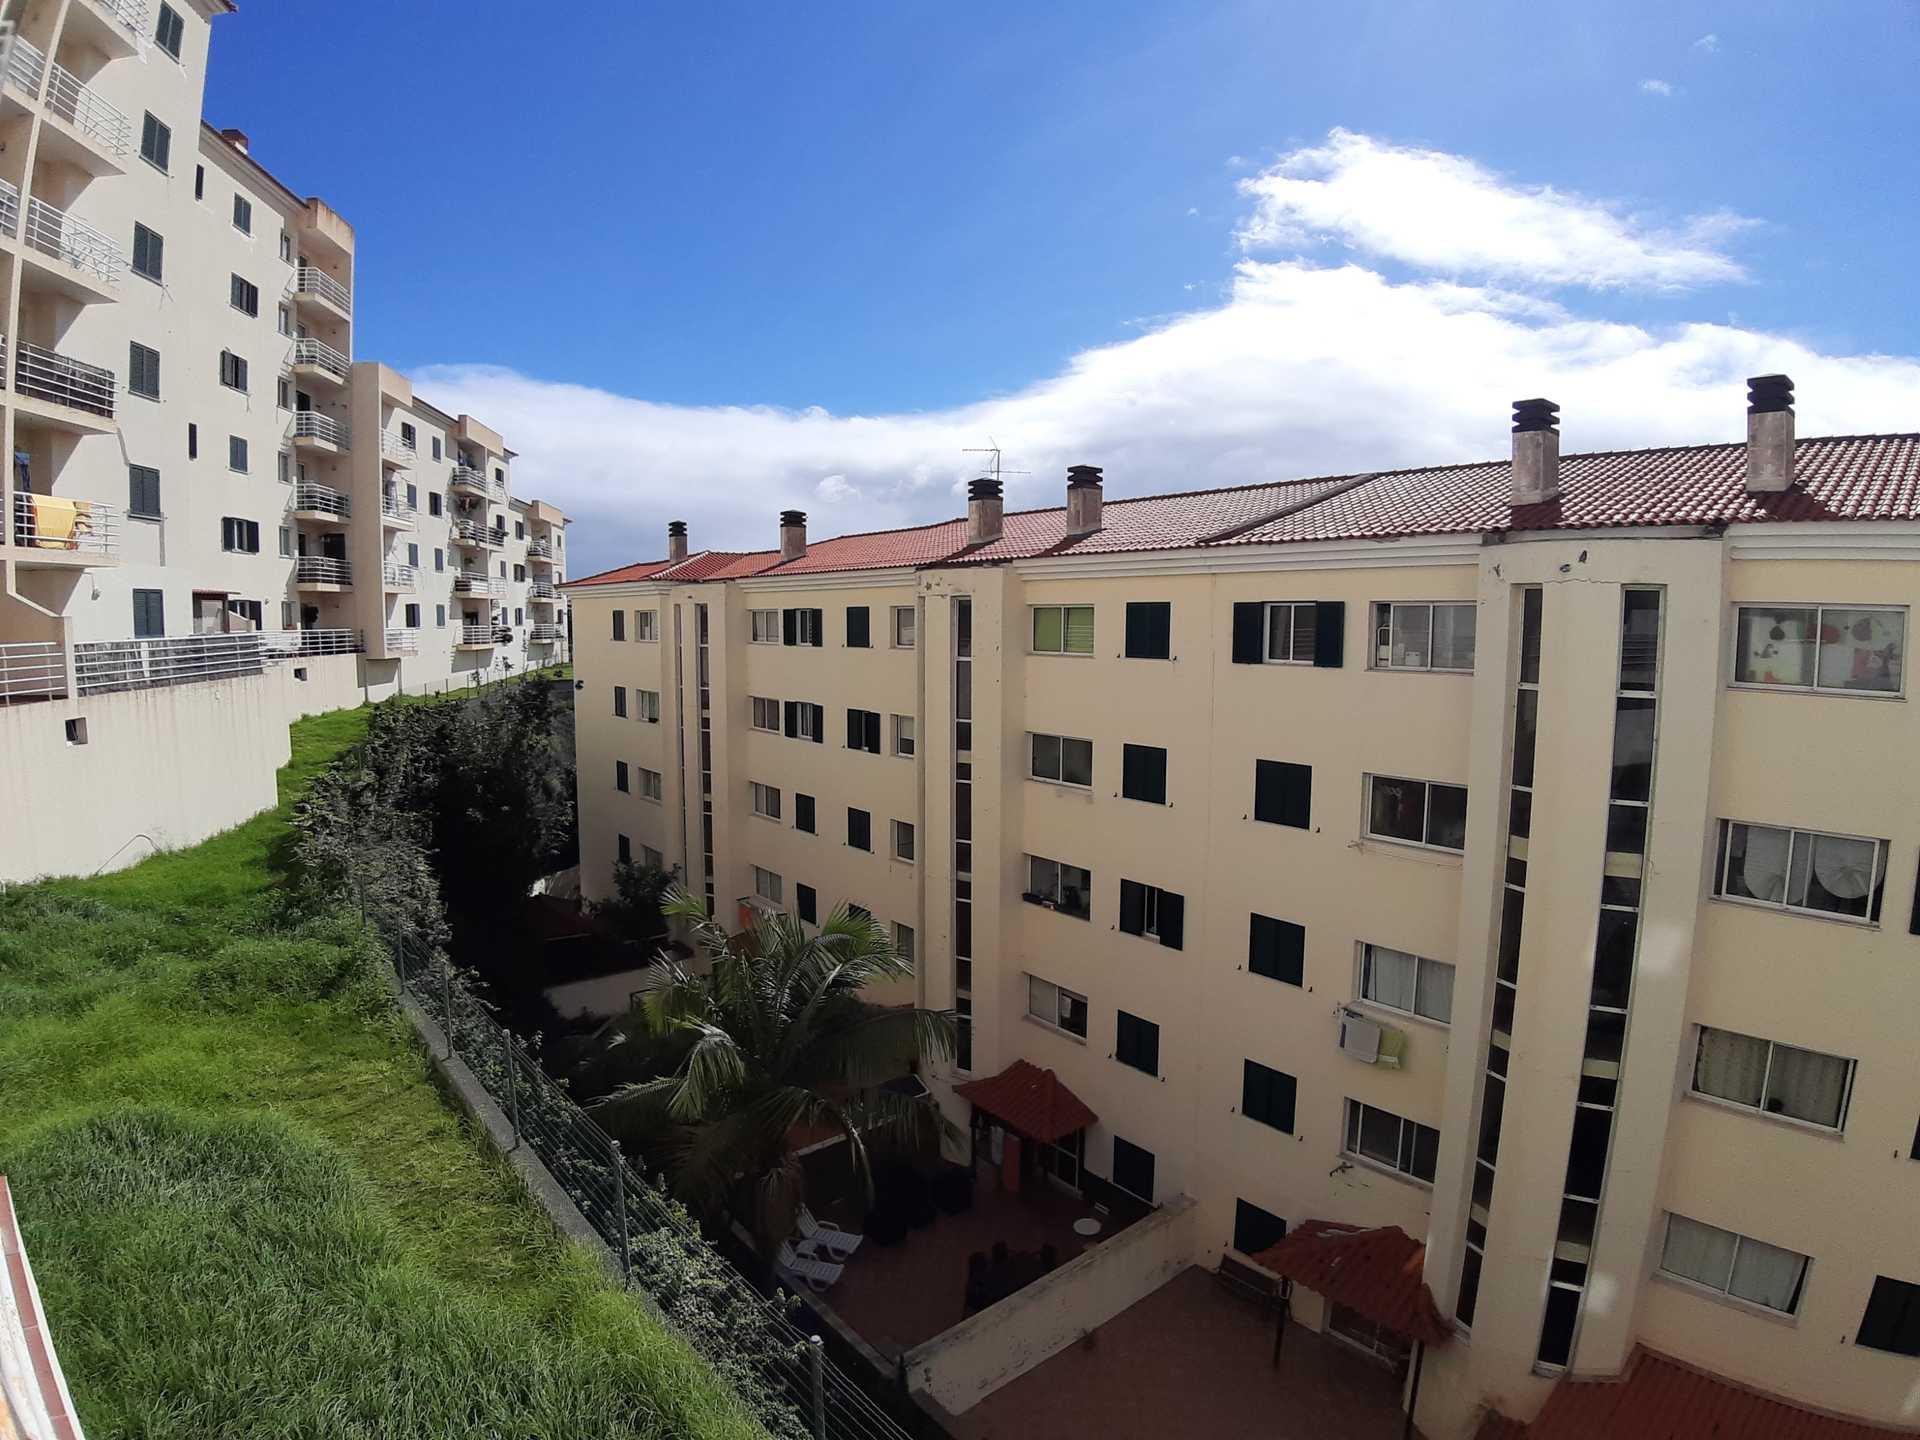 Condominium in Vila Zaff, Rua da Olaria 10214181